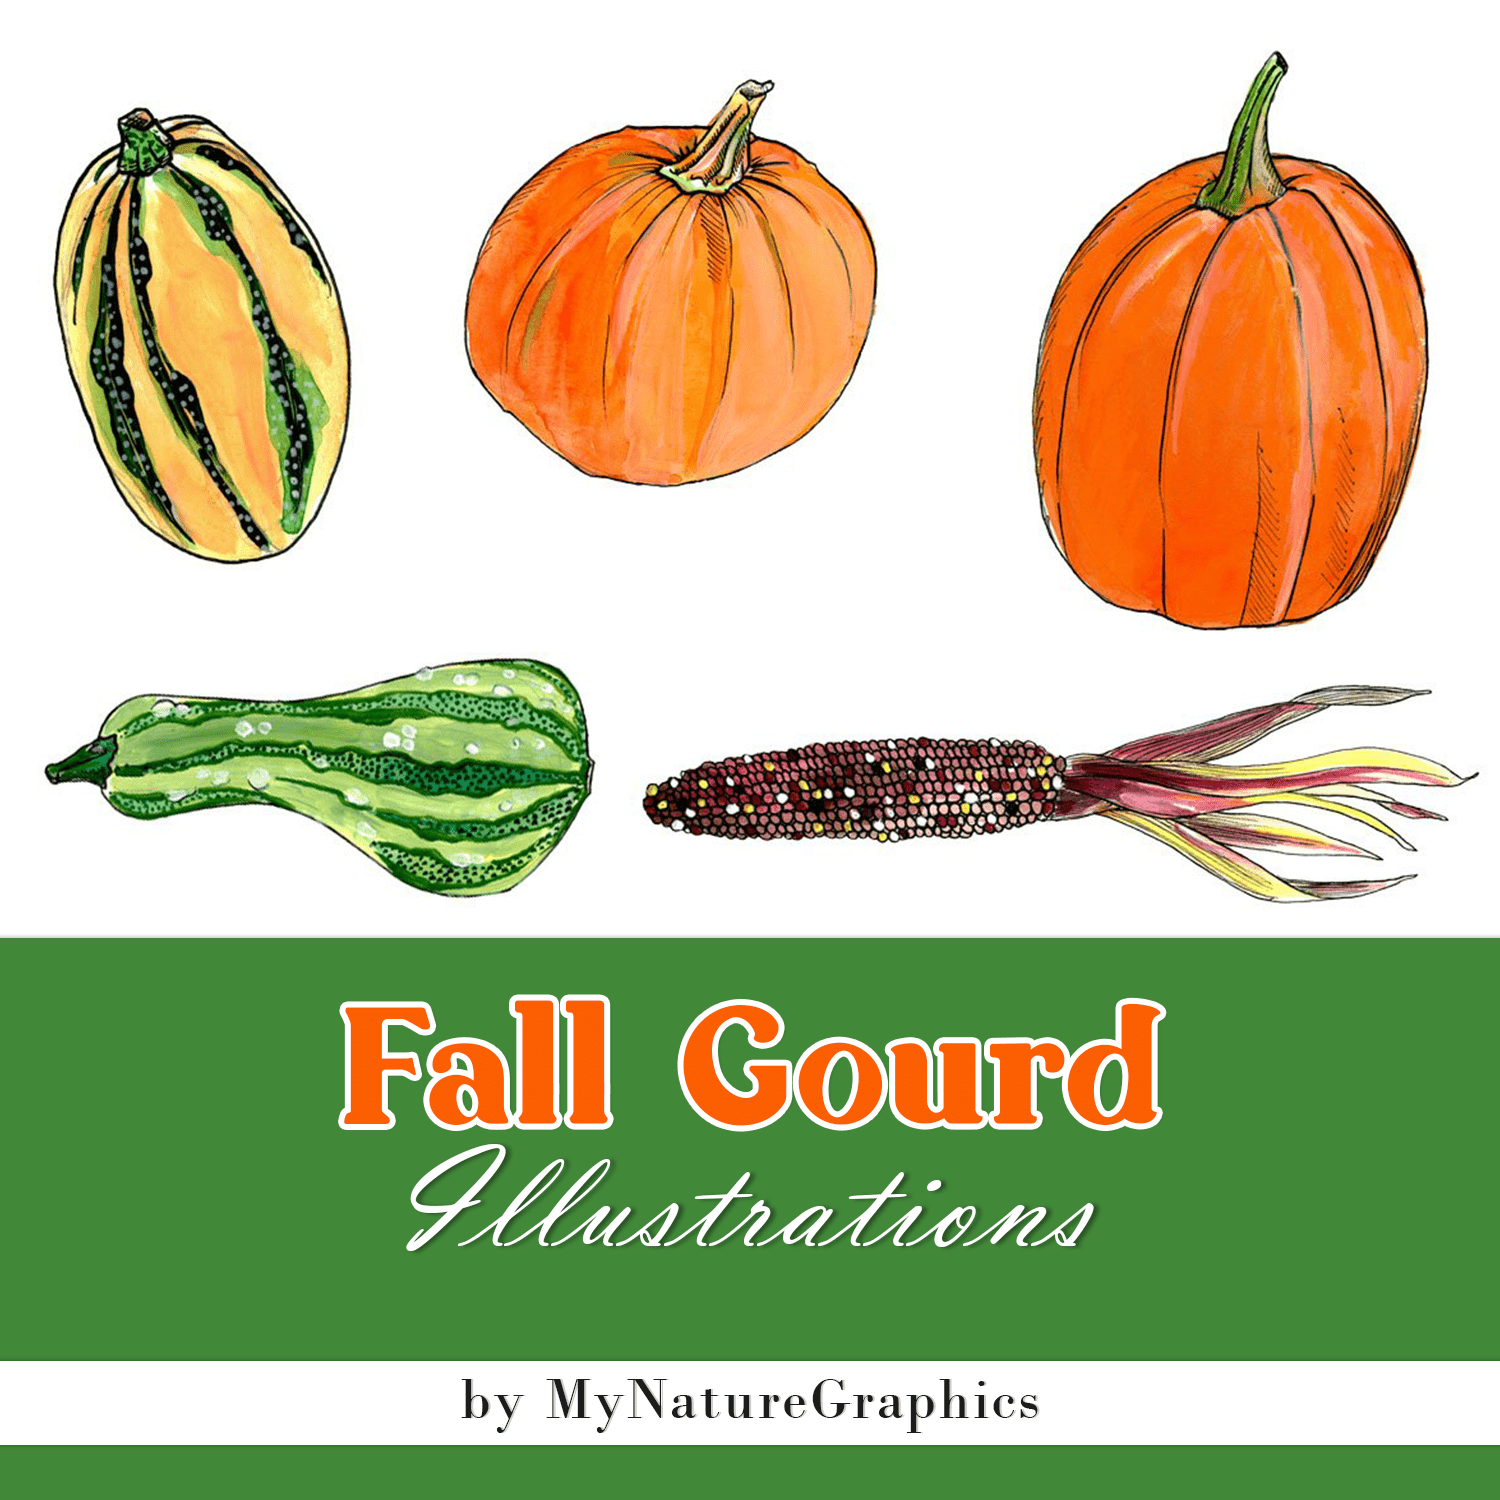 Fall Gourd Illustrations.